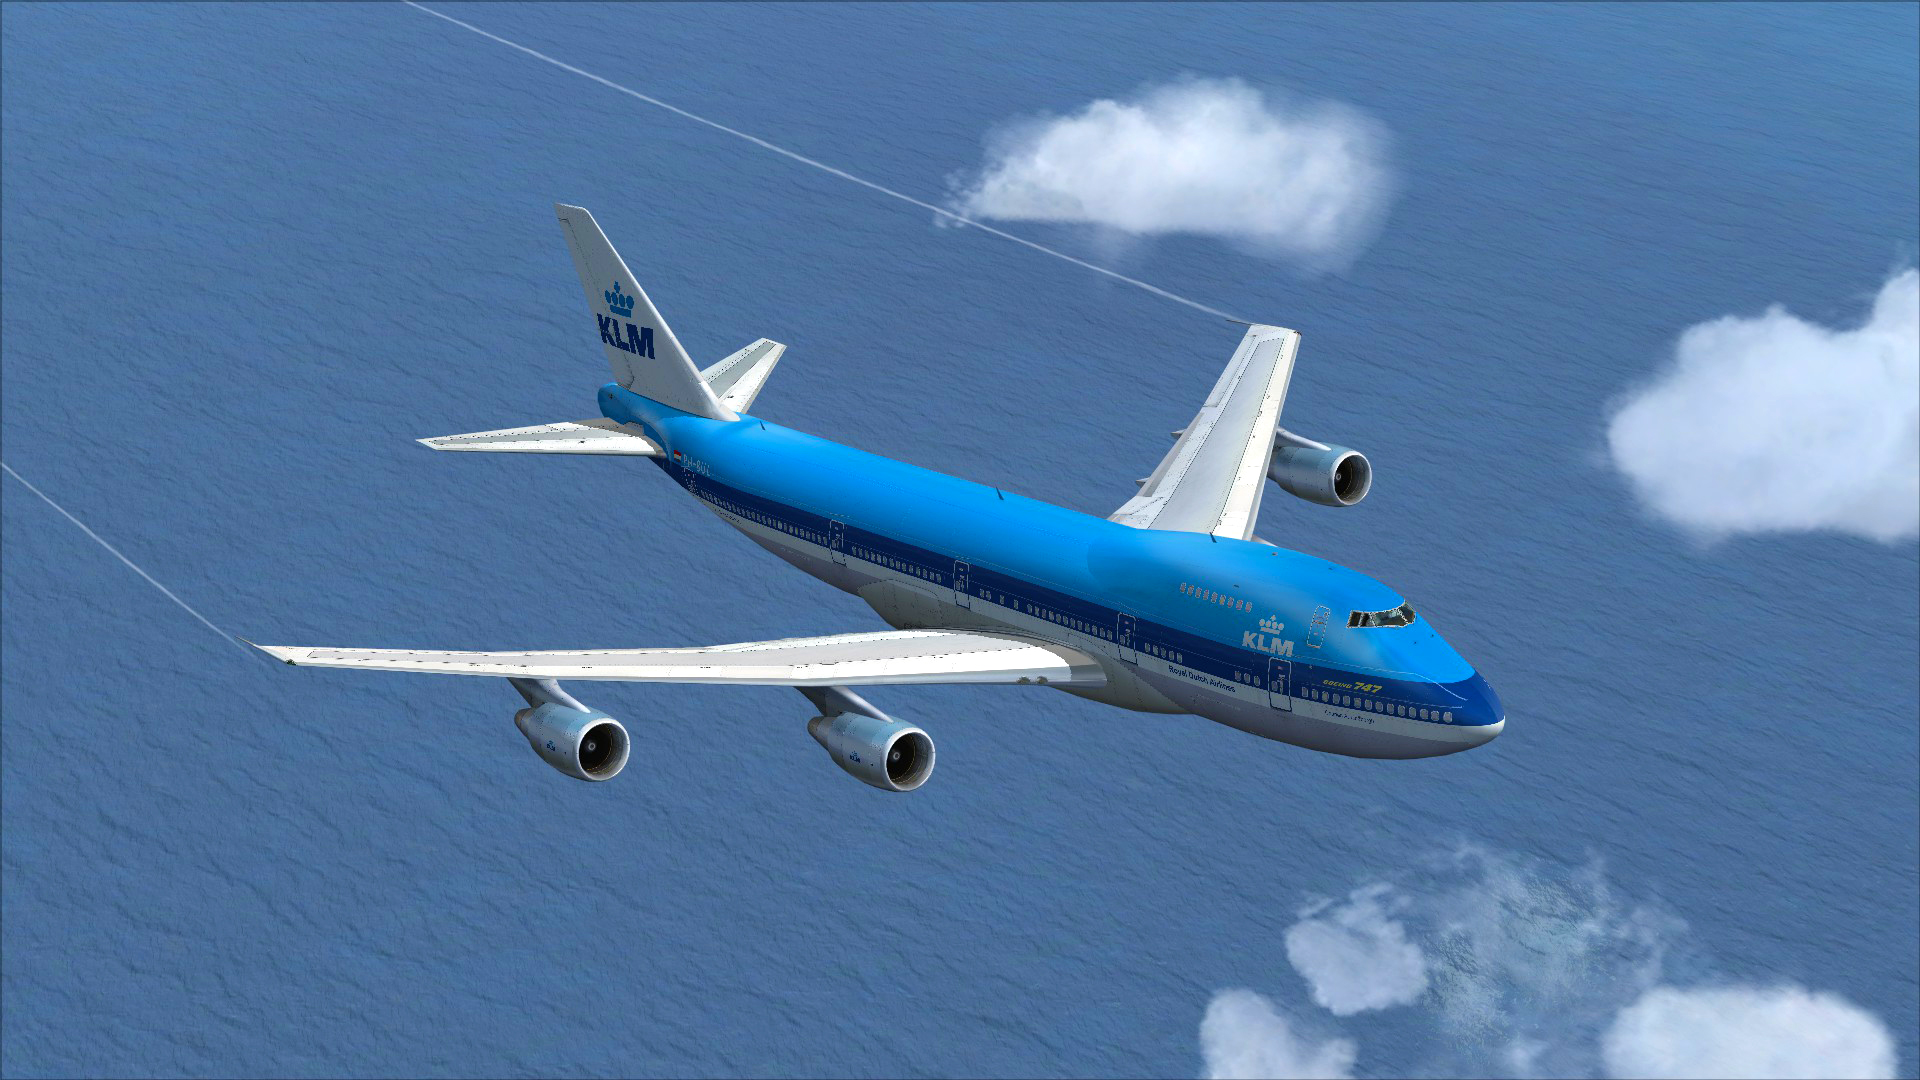 Microsoft Flight Simulator X: Steam Edition on Steam